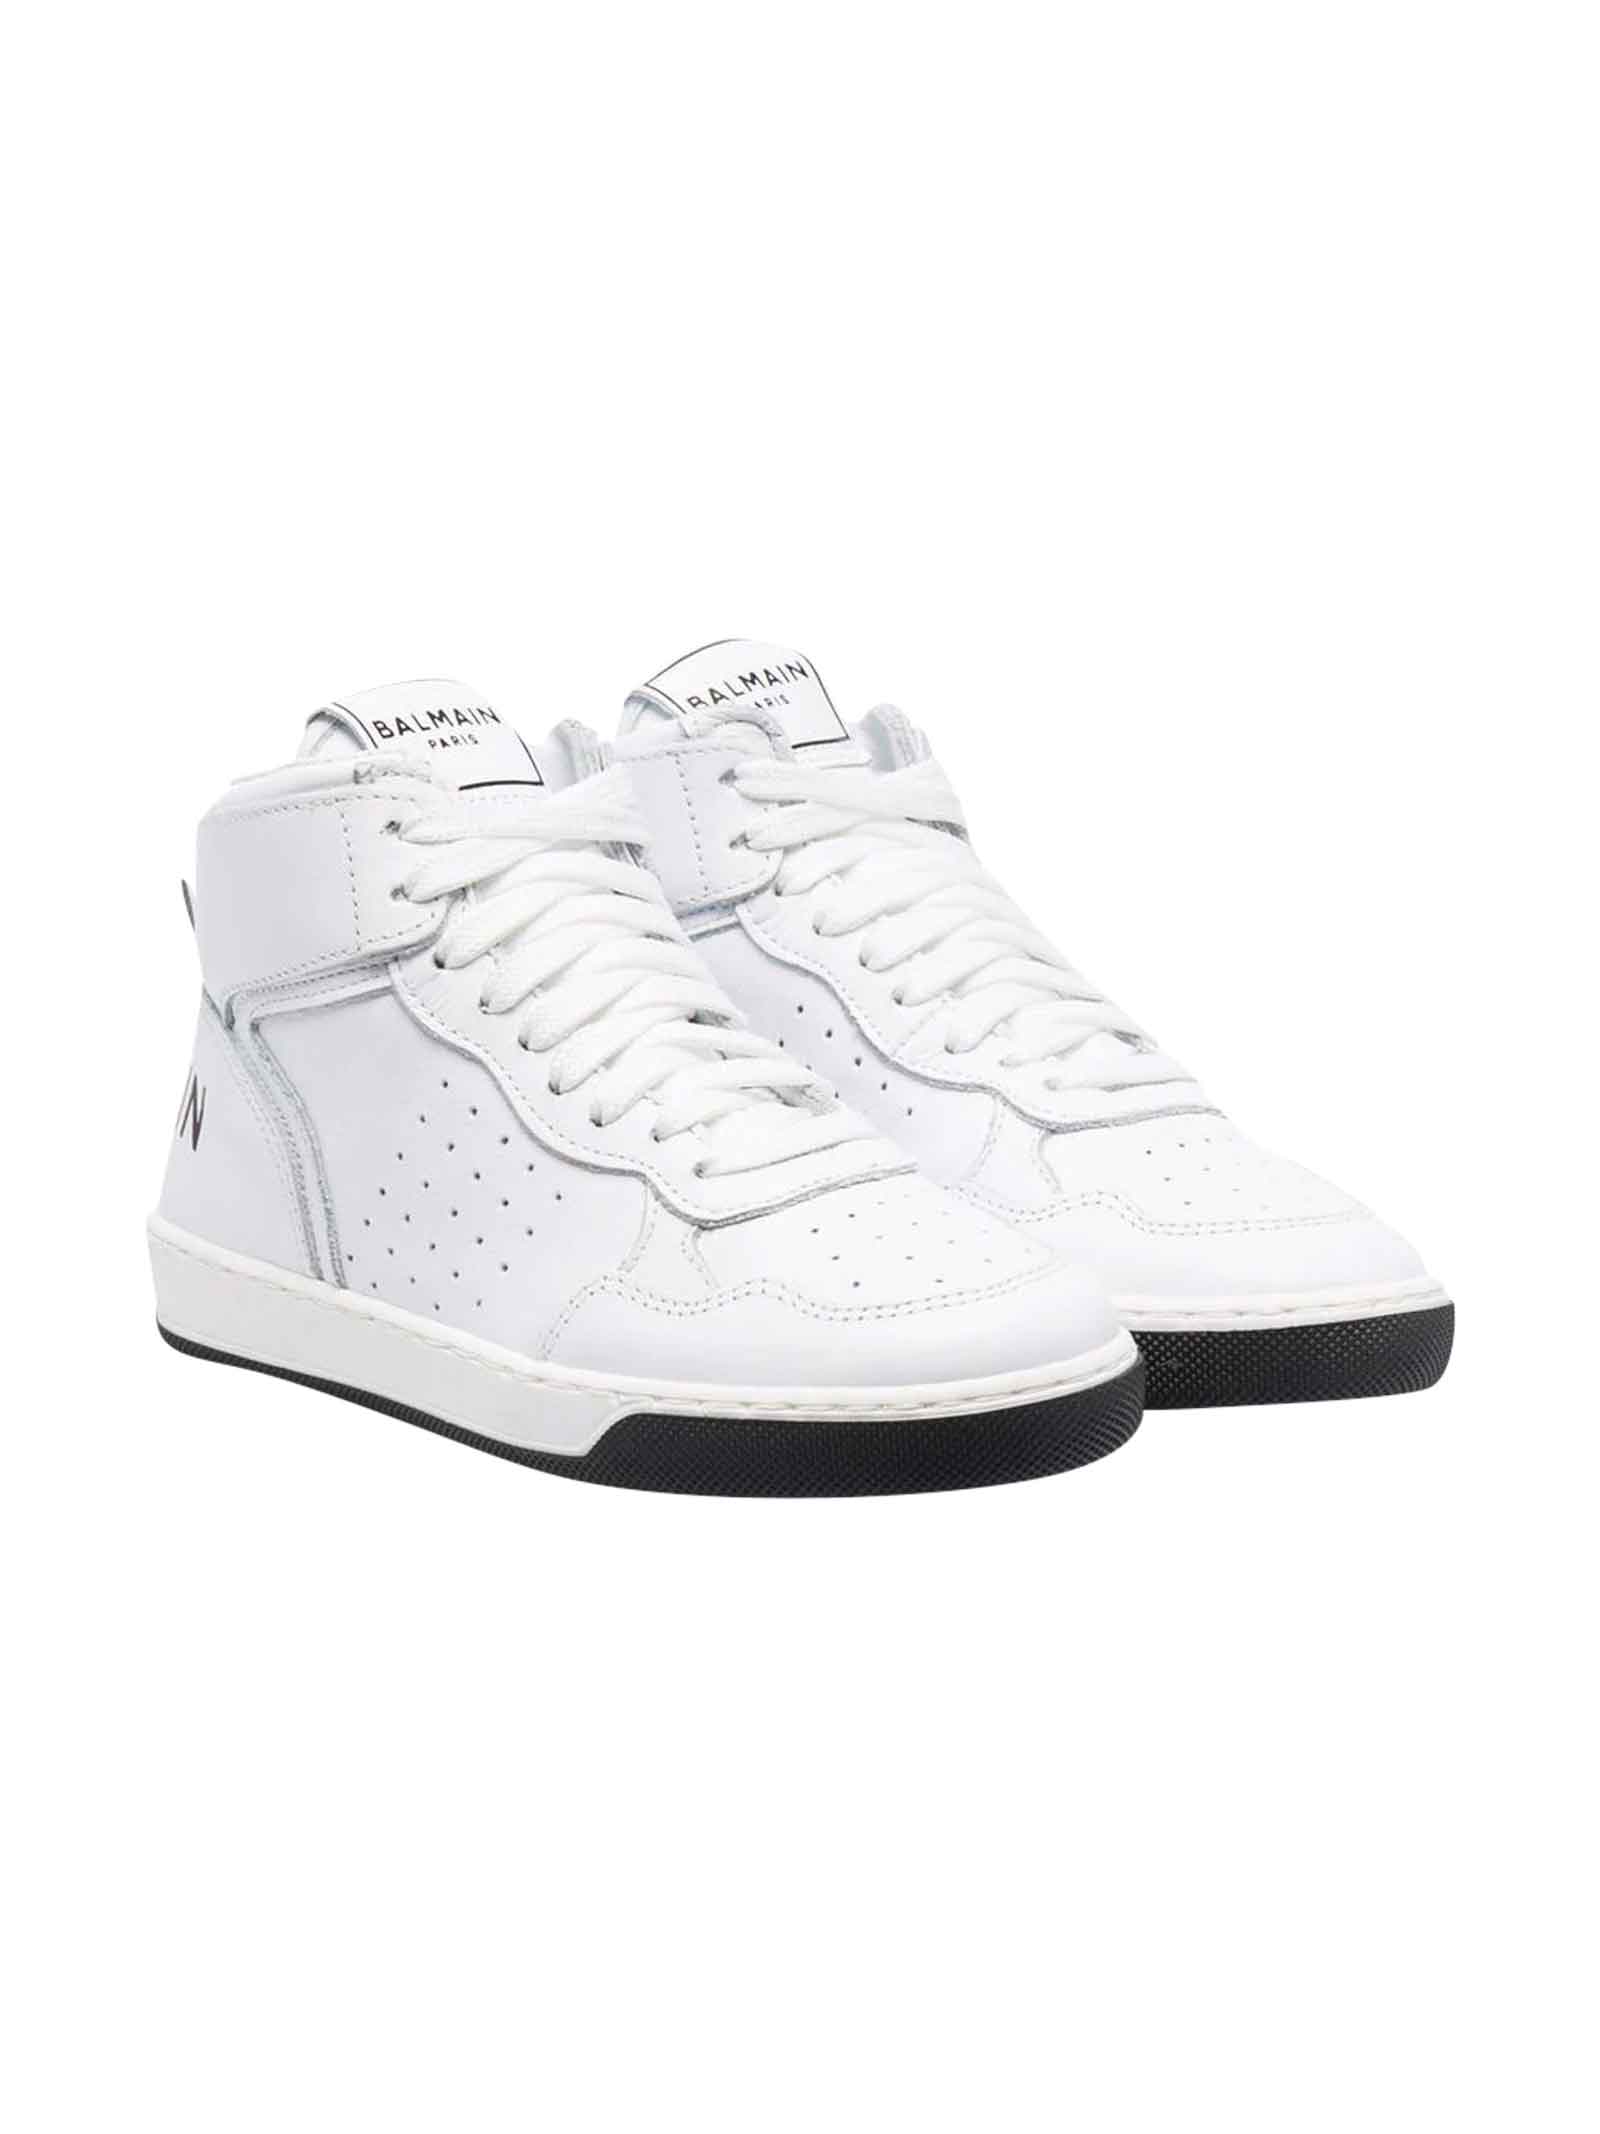 Balmain Teen Unisex White Sneakers